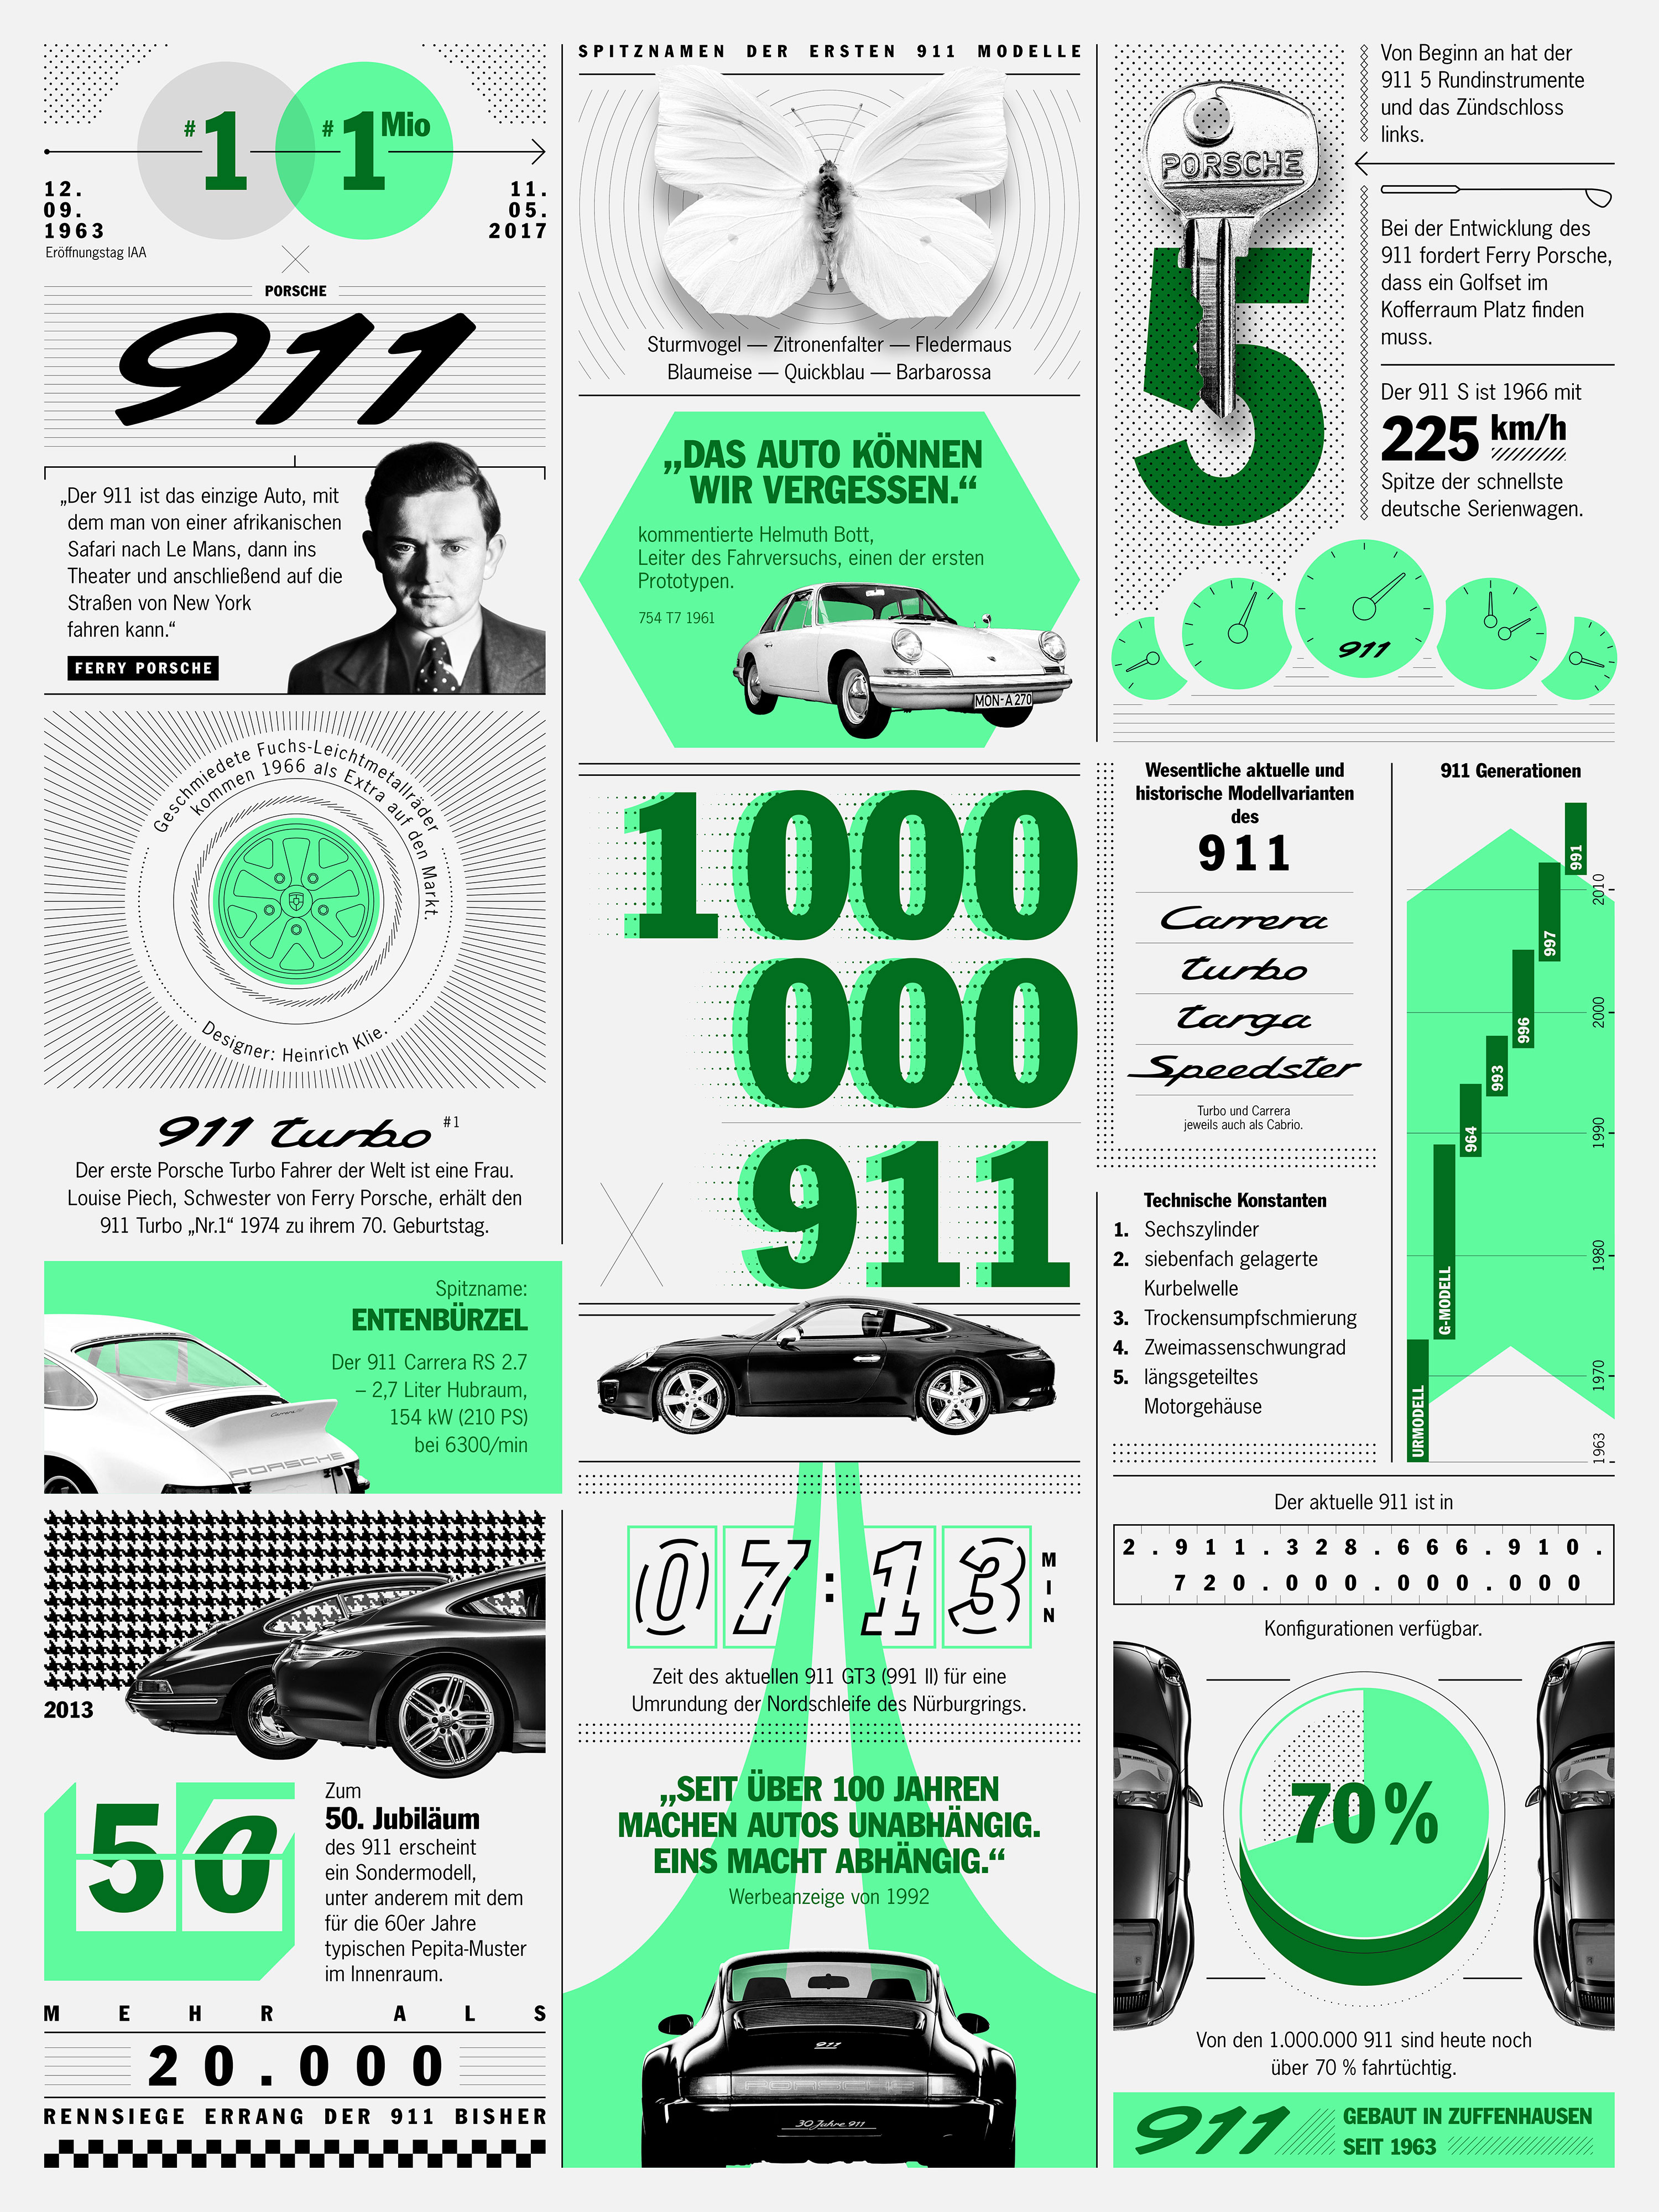 Einmillionster 911, Infografik, 2017, Porsche AG